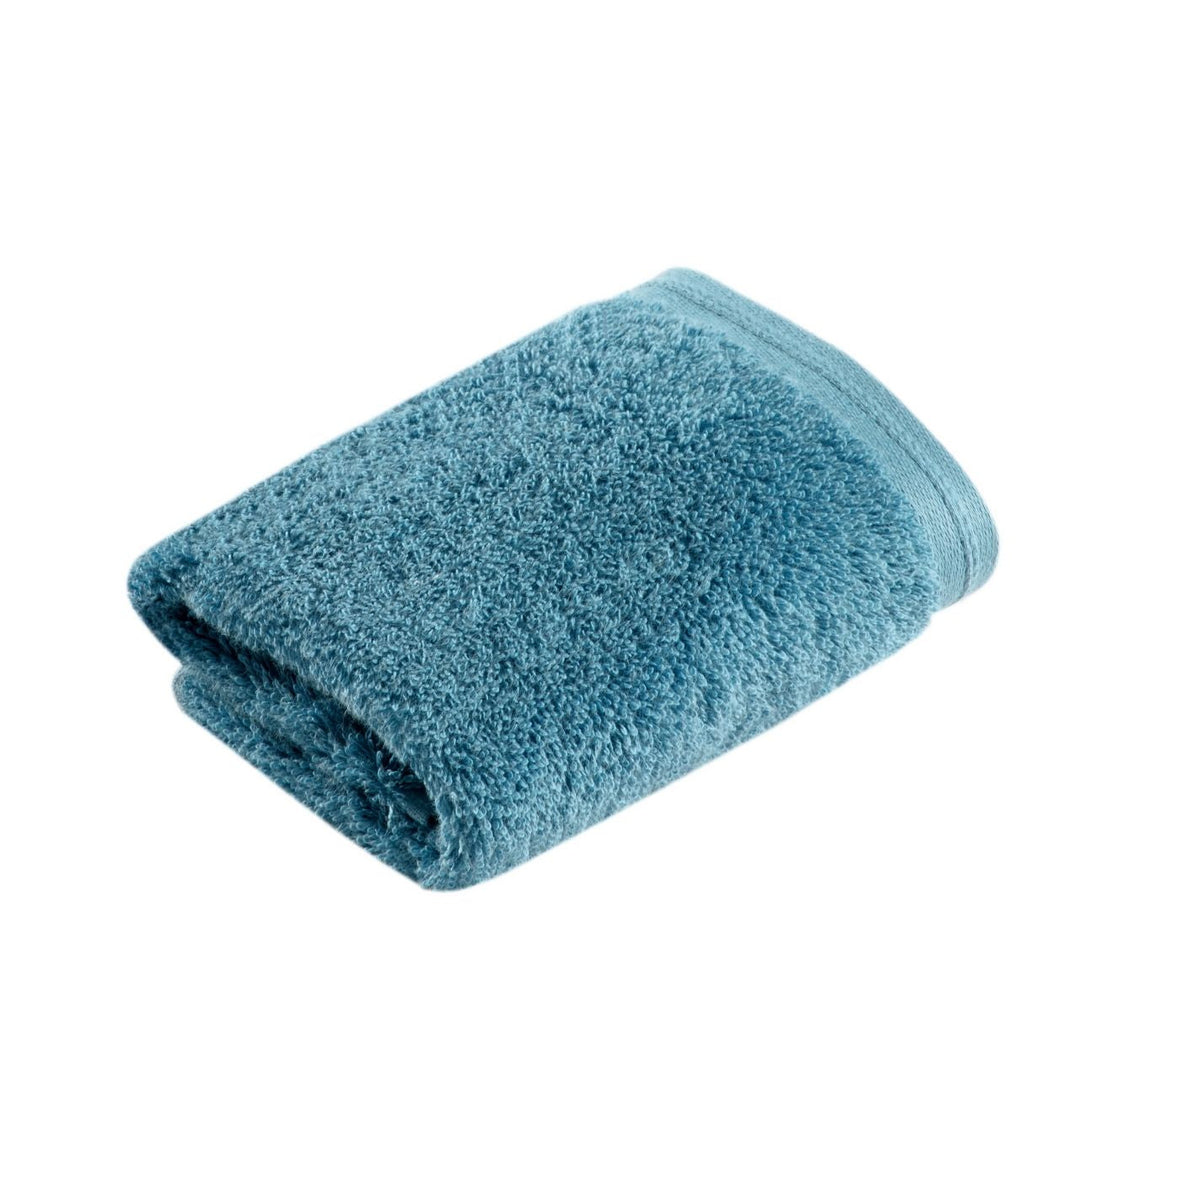 Voseen-Towel-Vegan-Life-Sea-Shimmer-Face-Towel.jpg